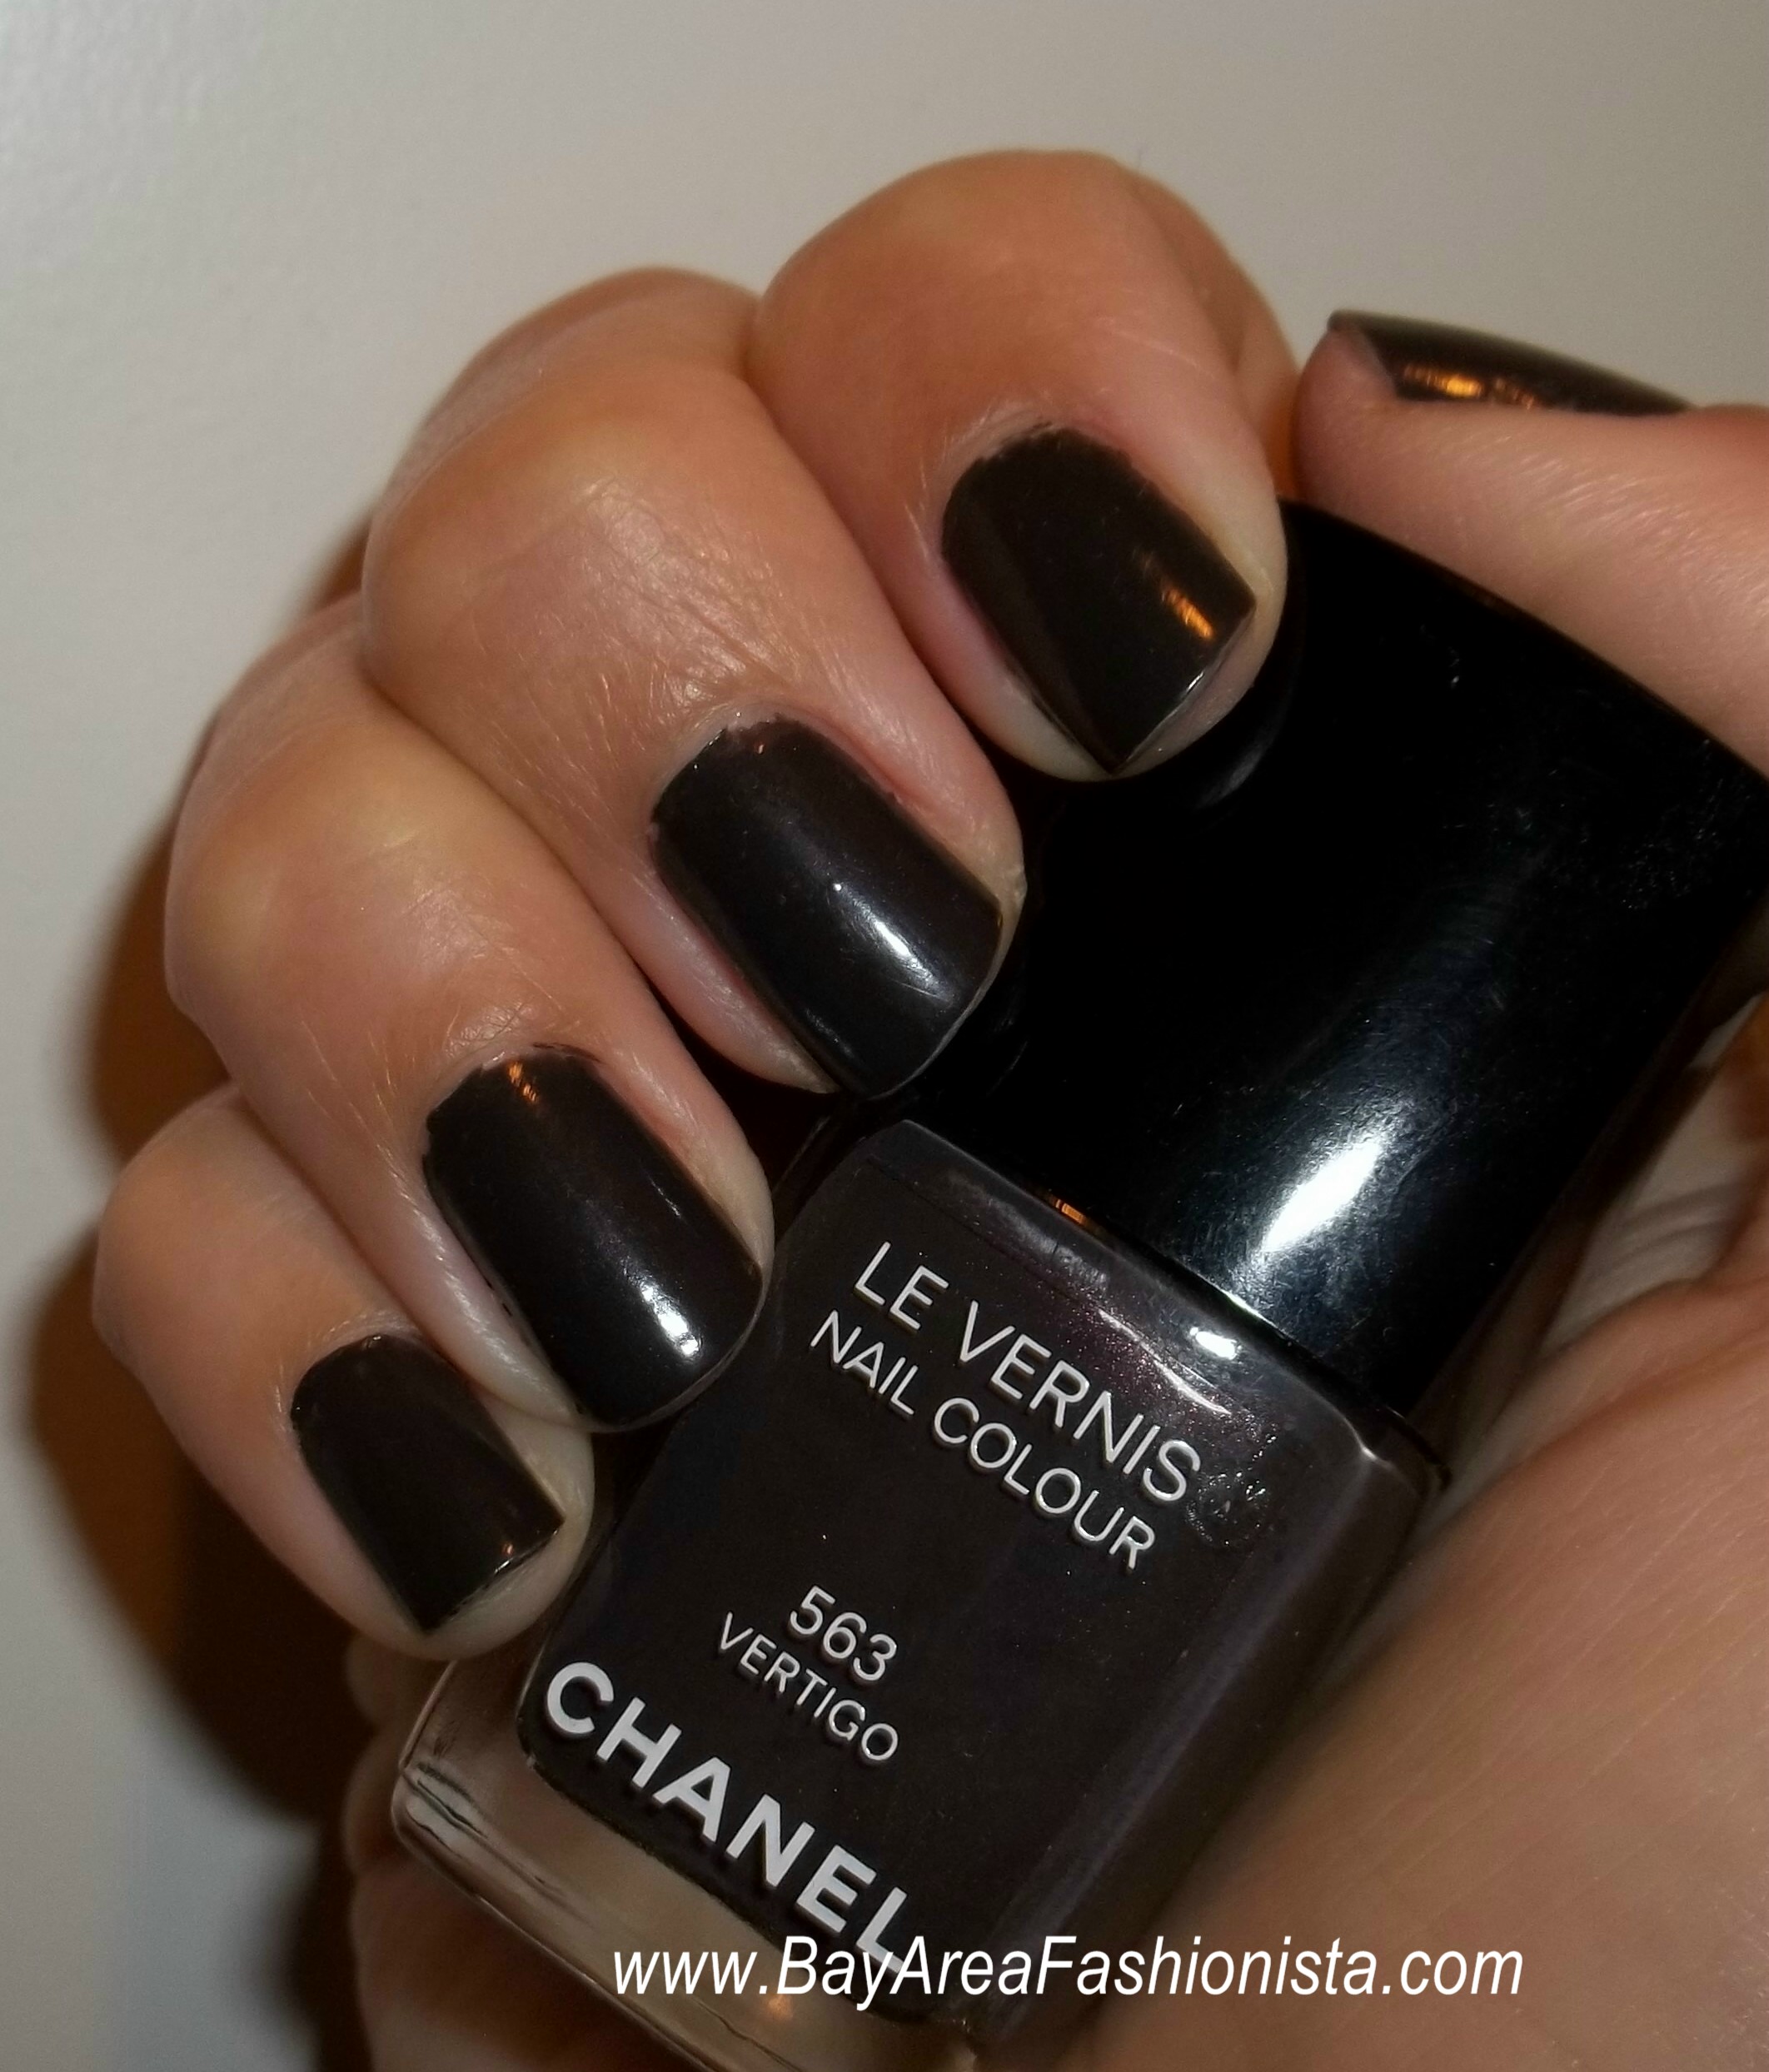 Chanel Le Vernis for Fall 2011: Quartz, Graphite and Peridot - The